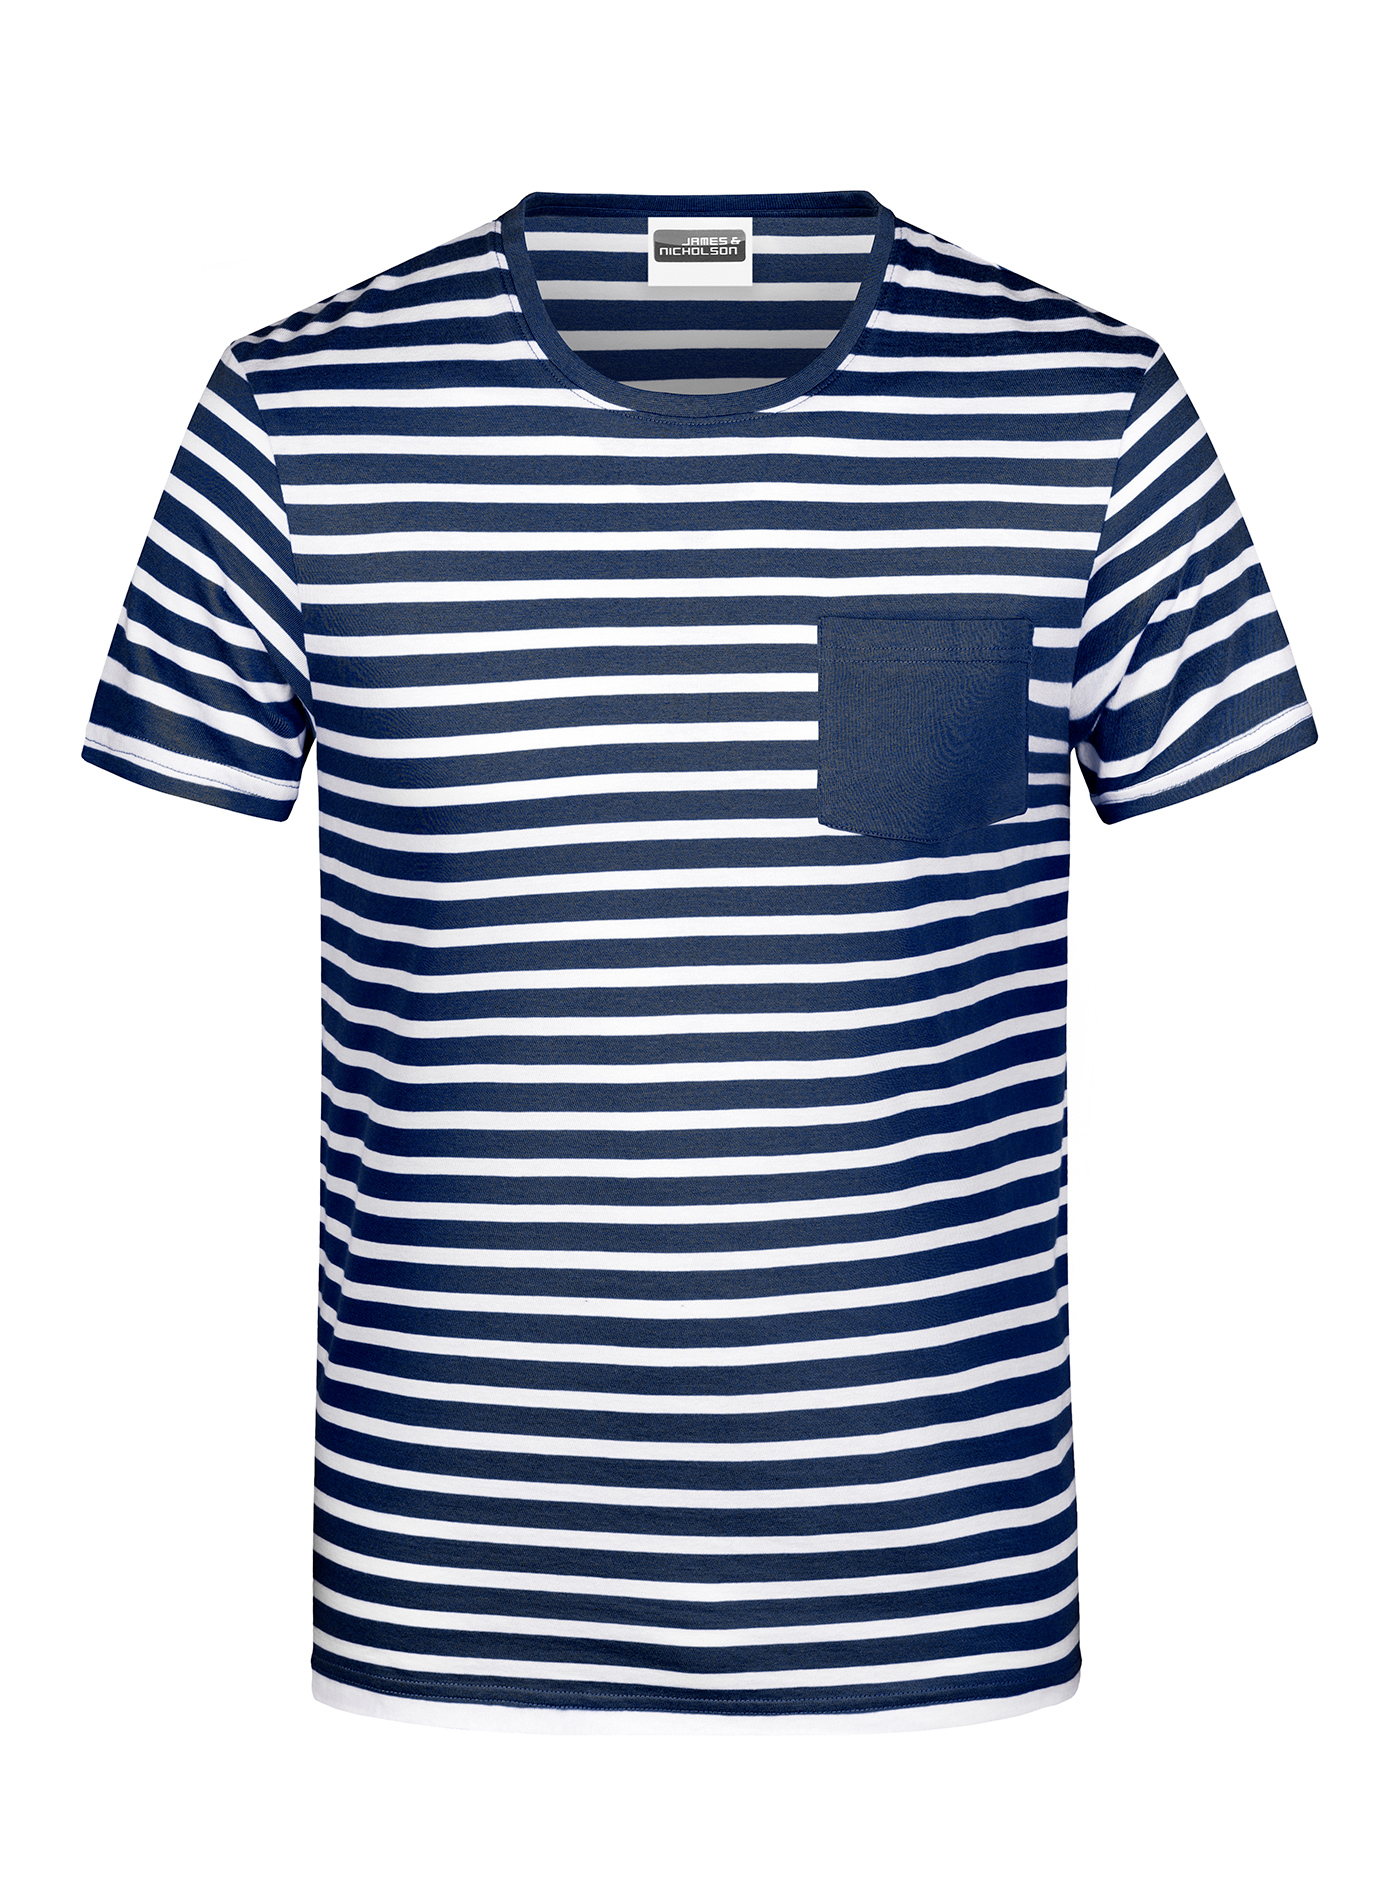 Pánské pruhované tričko James & Nicholson - Tmavě modrá a bílá XL